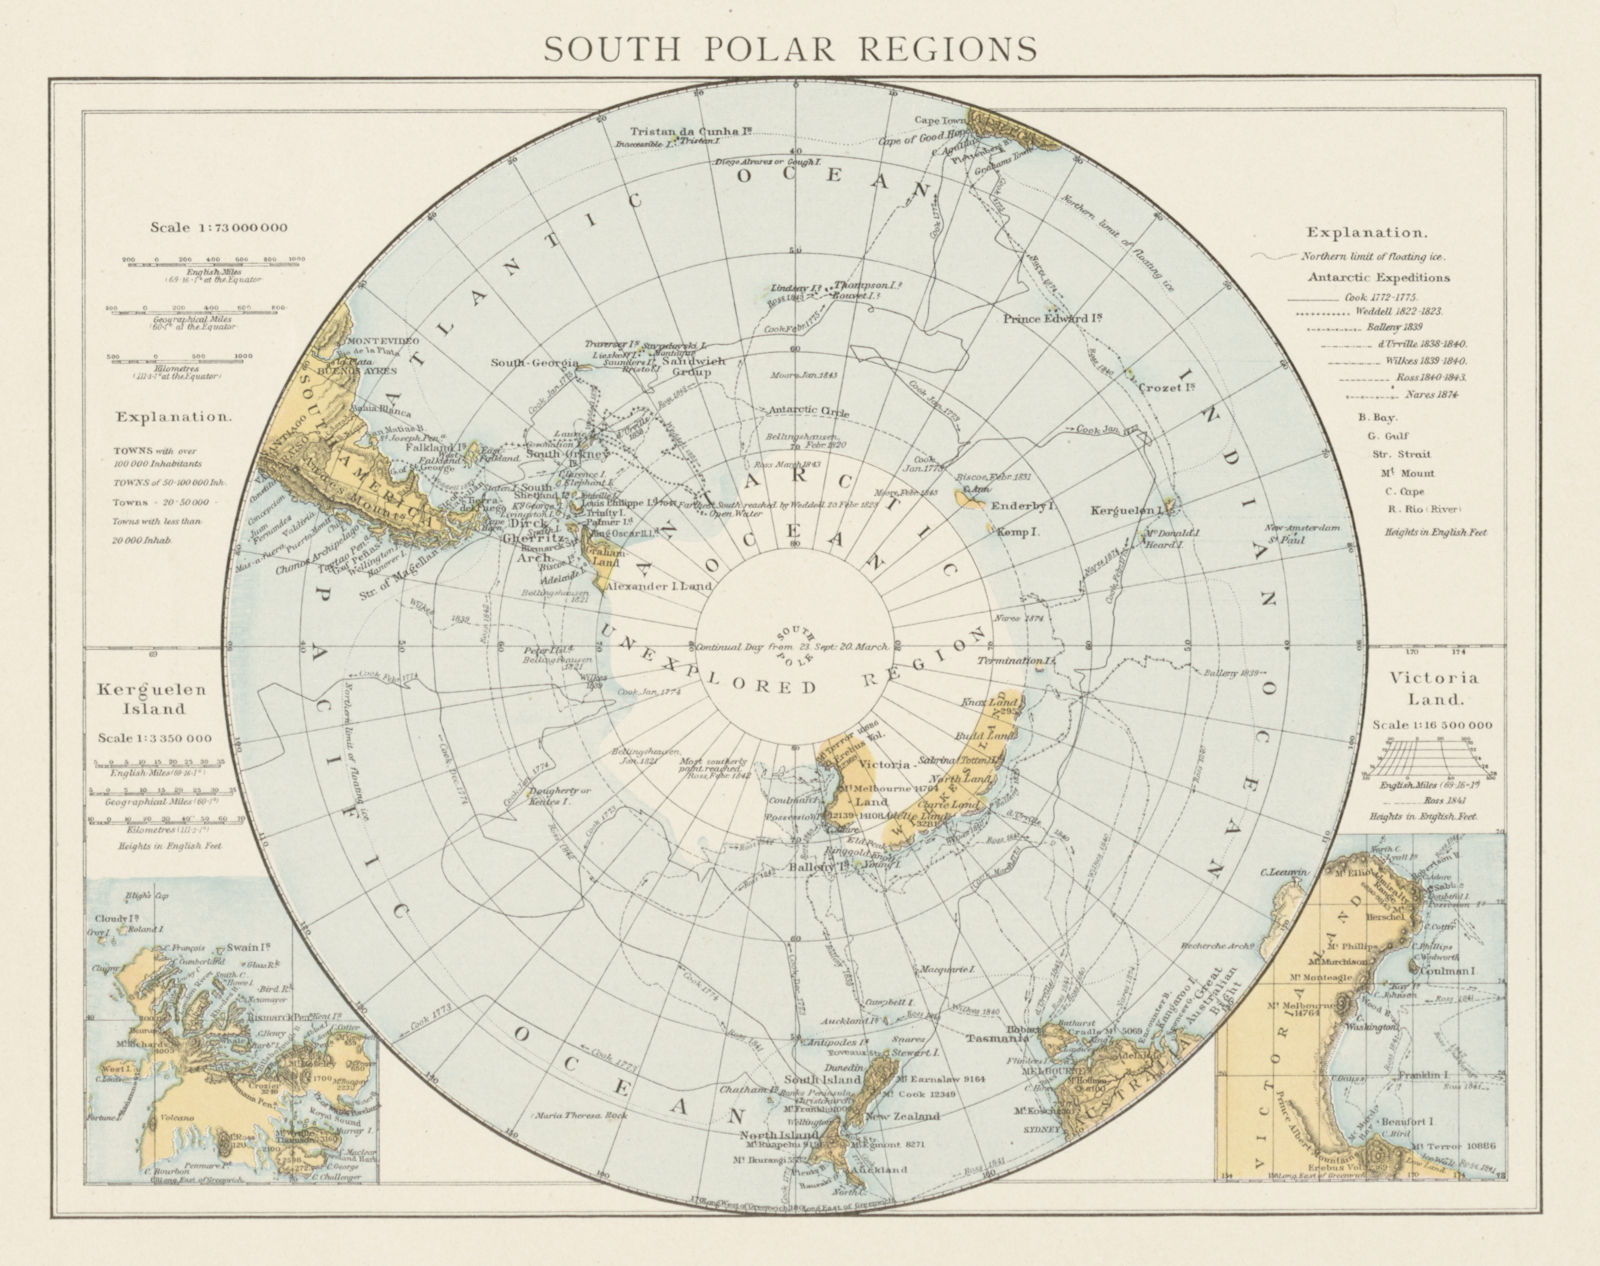 South Polar region. Antarctic. Explorers' routes. Unexplored. THE TIMES 1900 map